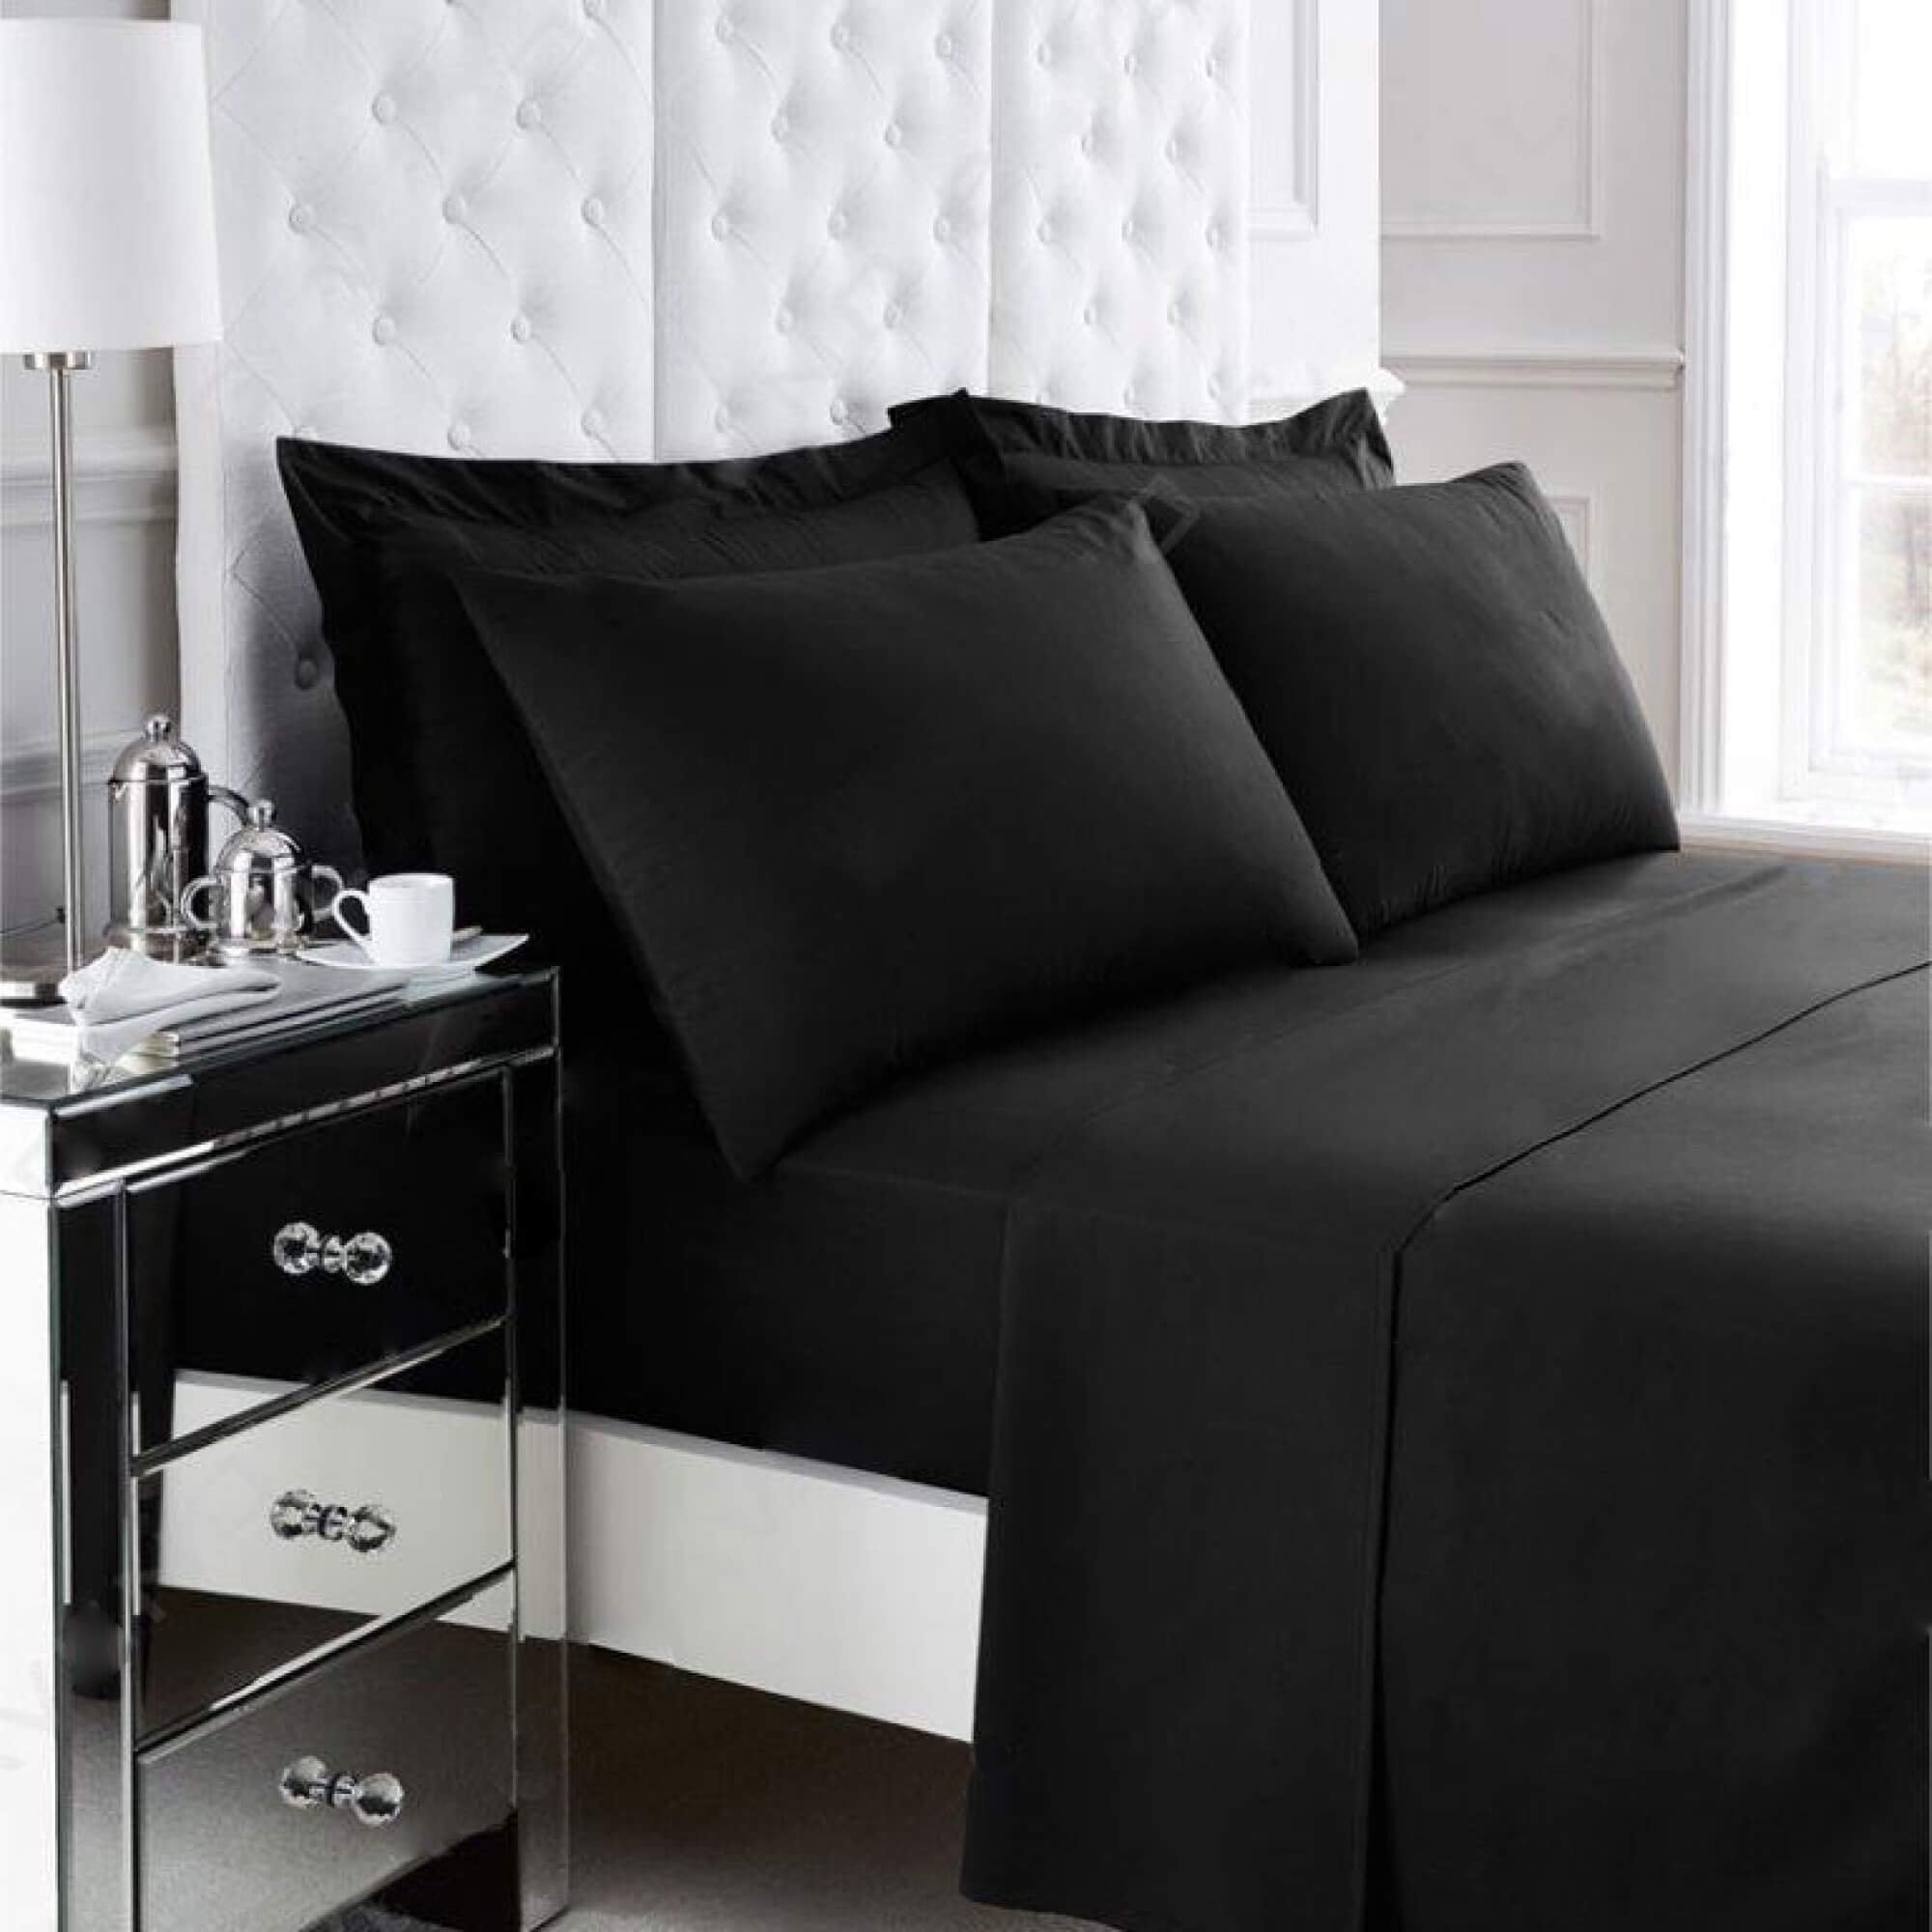 Non Iron Percale Bedding Sheet Range - Black - Housewife Pillowcase Pair - TJ Hughes